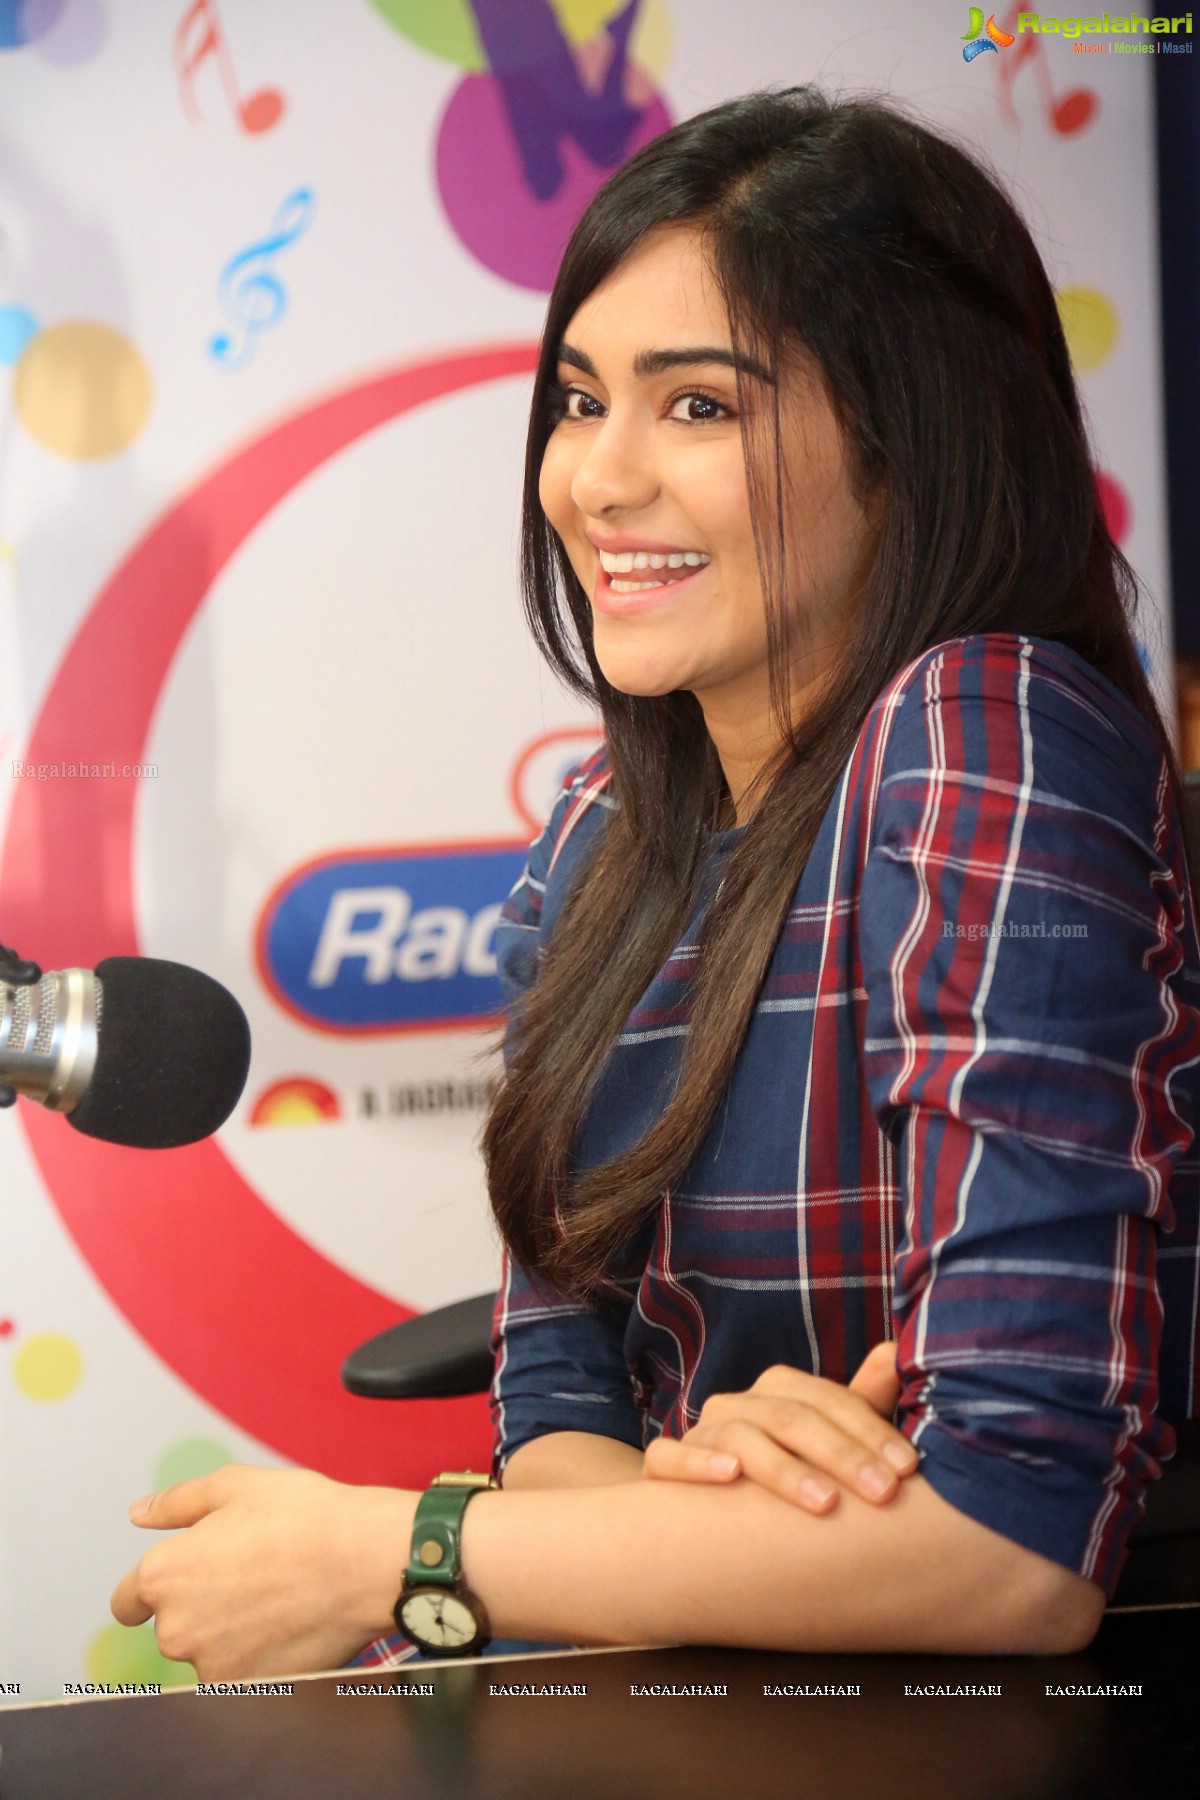 Adah Sharma at 91.1 FM Radio City